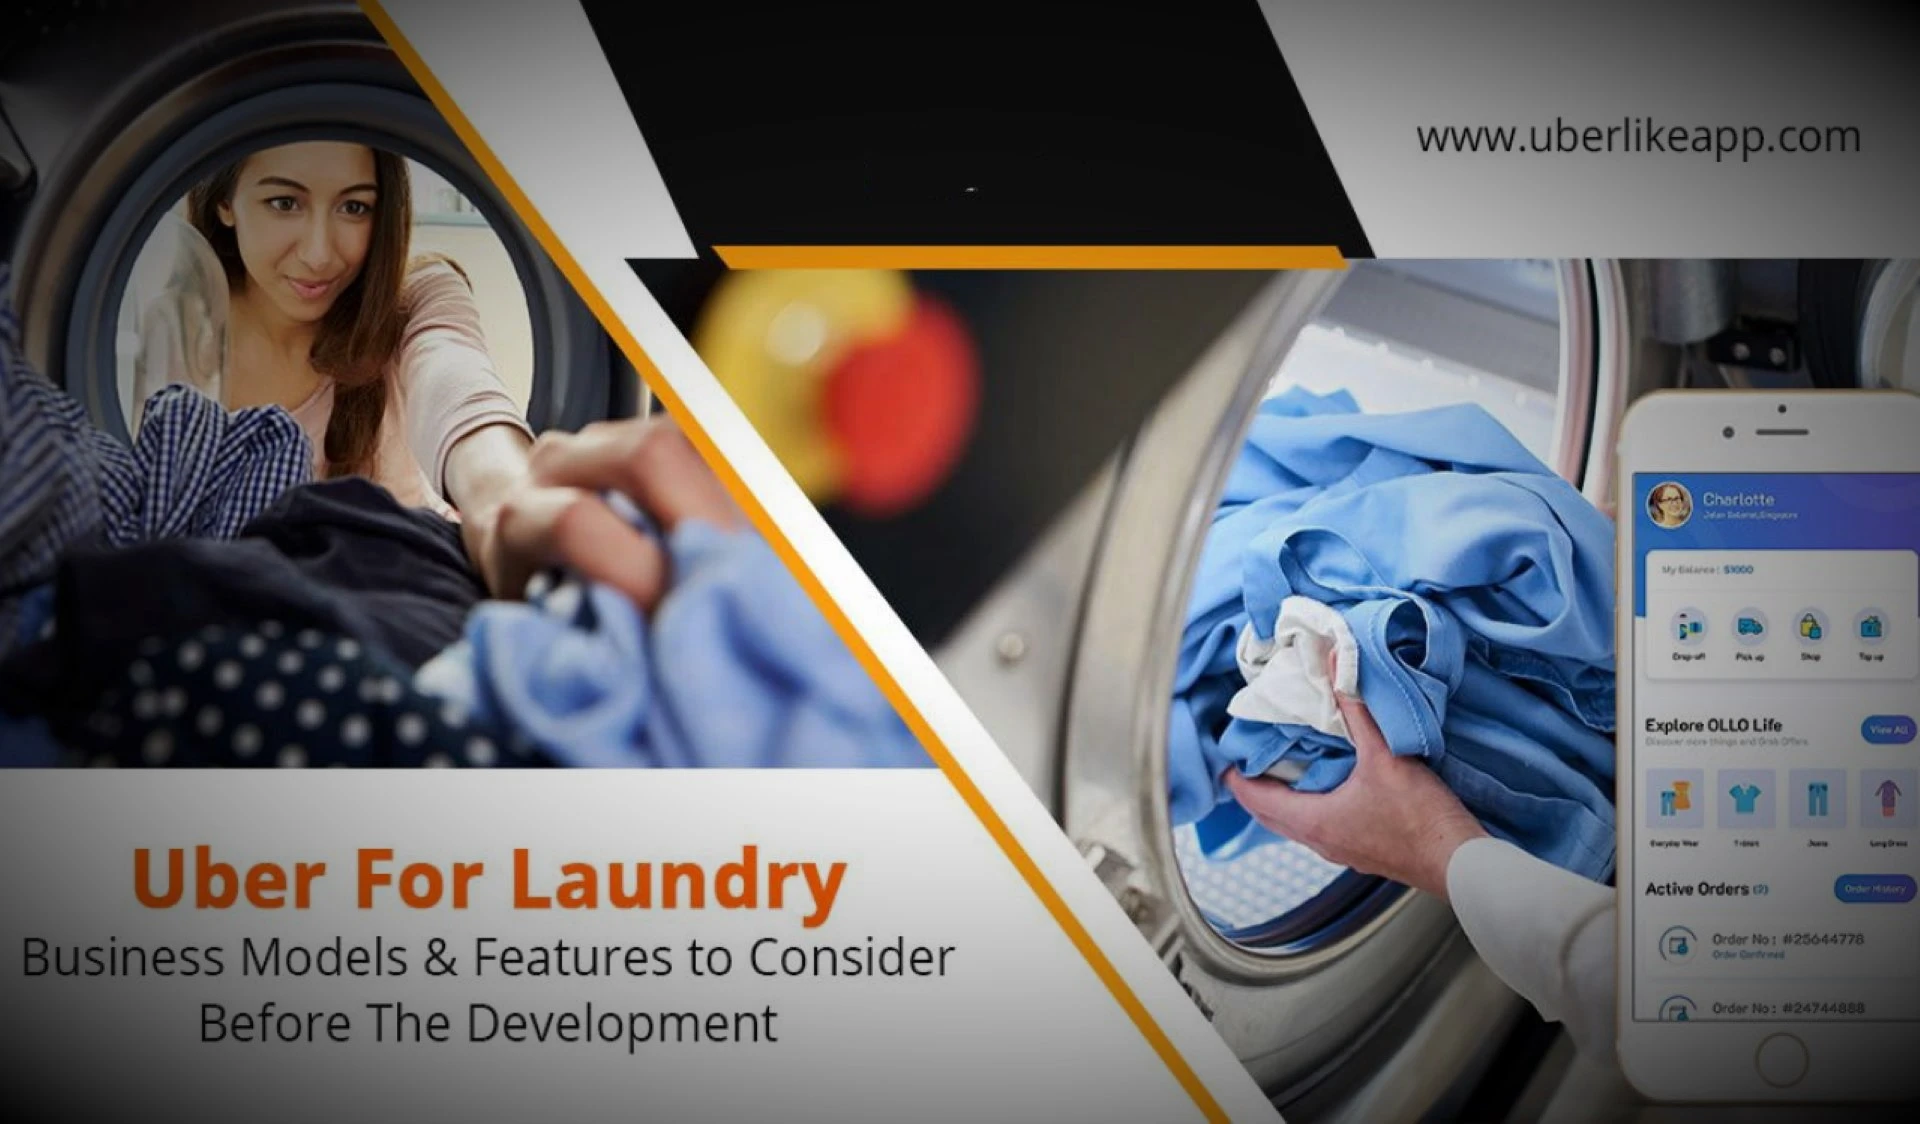 laundry service app model3 like uber laundry